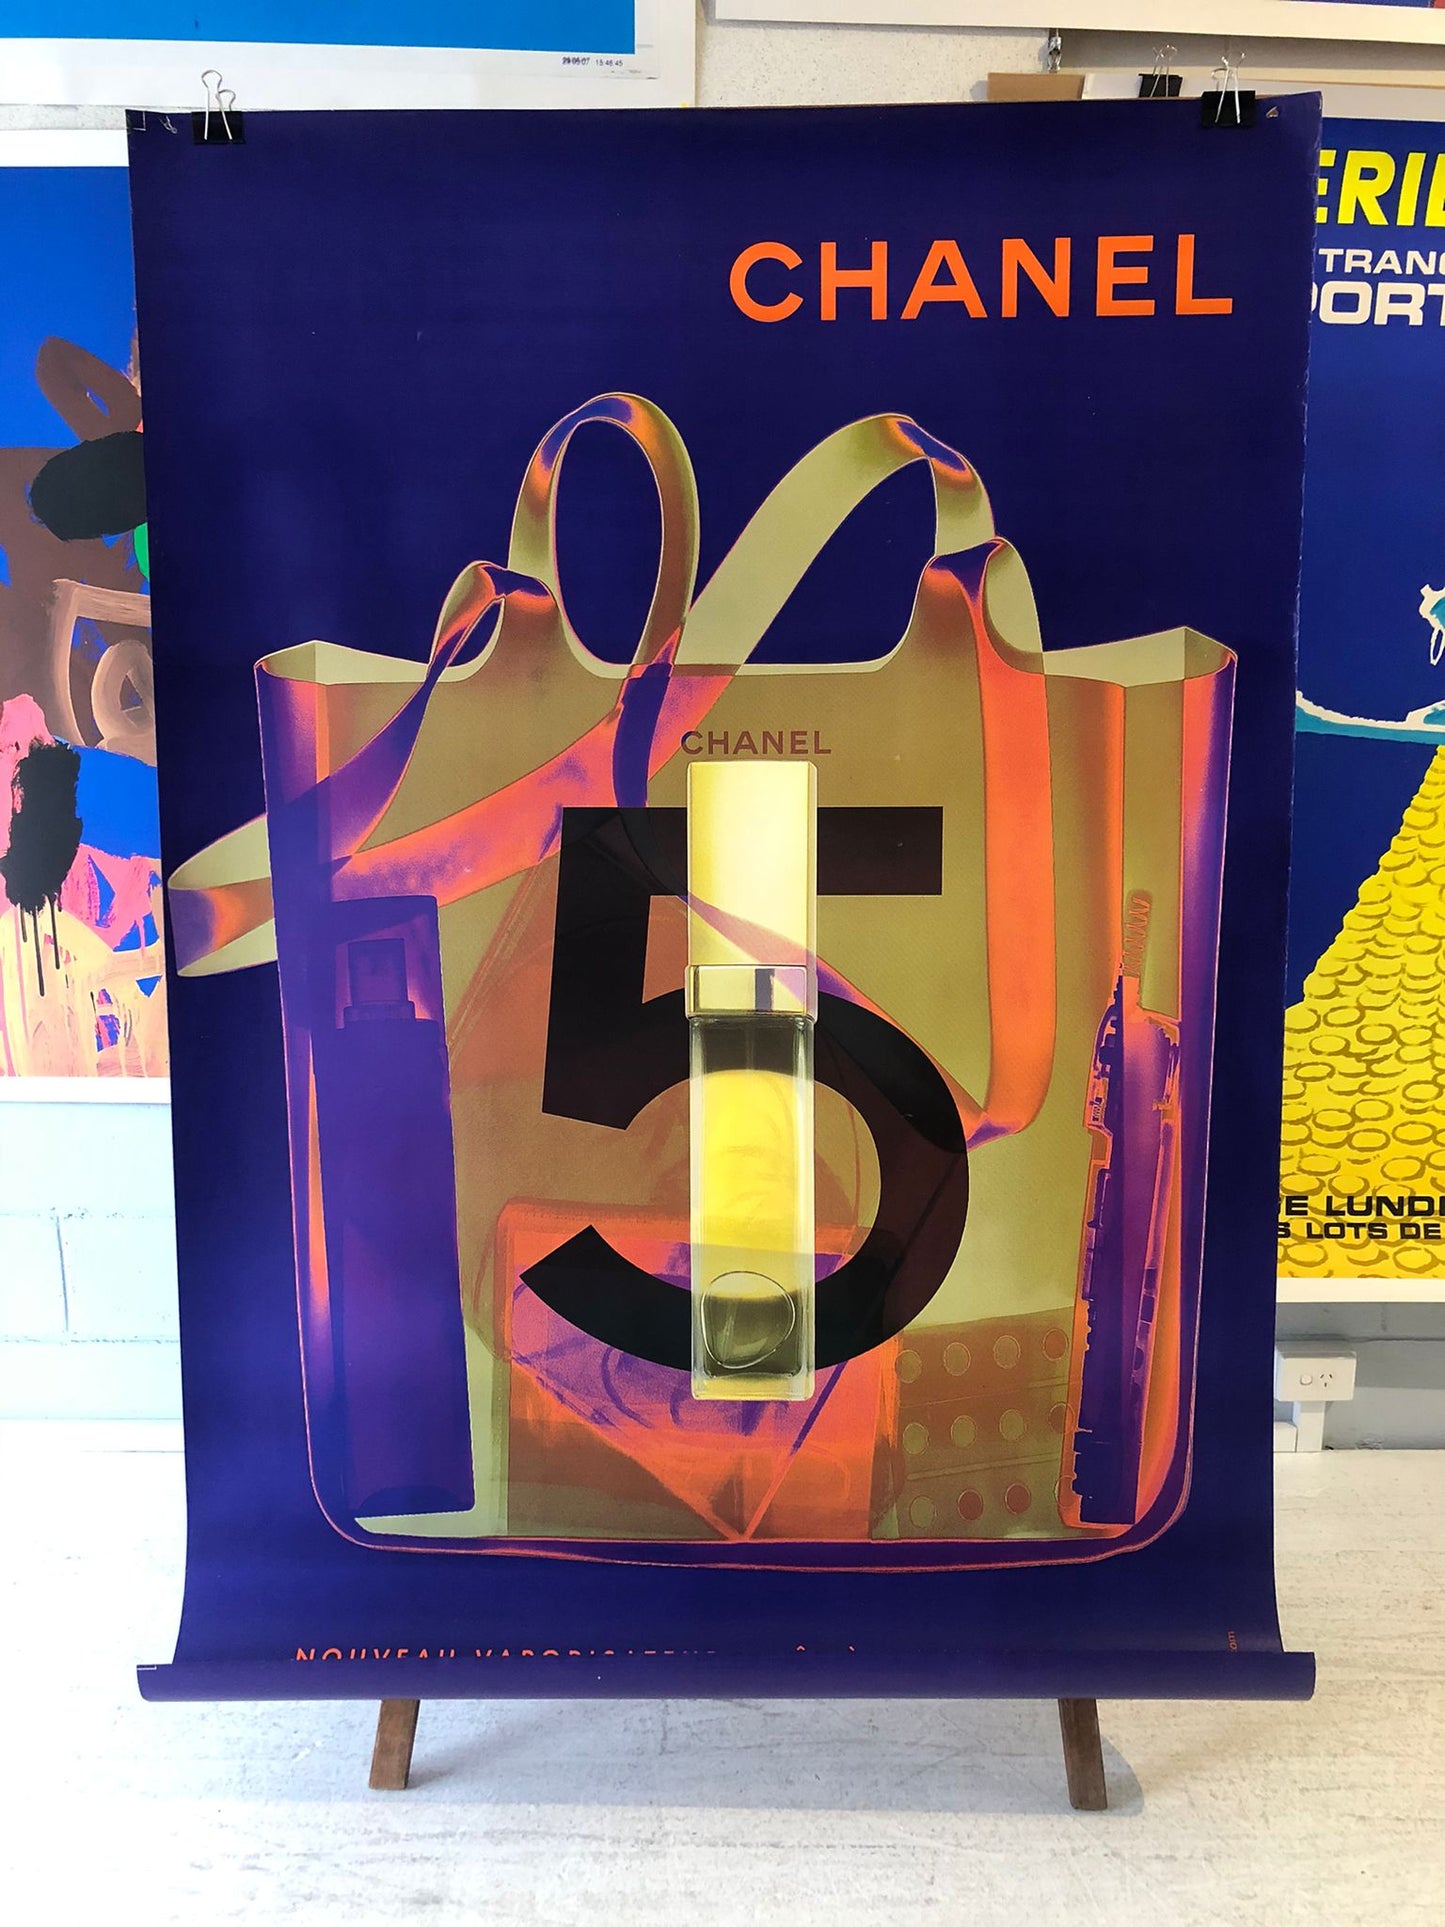 Chanel No. 5 Spray Purple and Orange